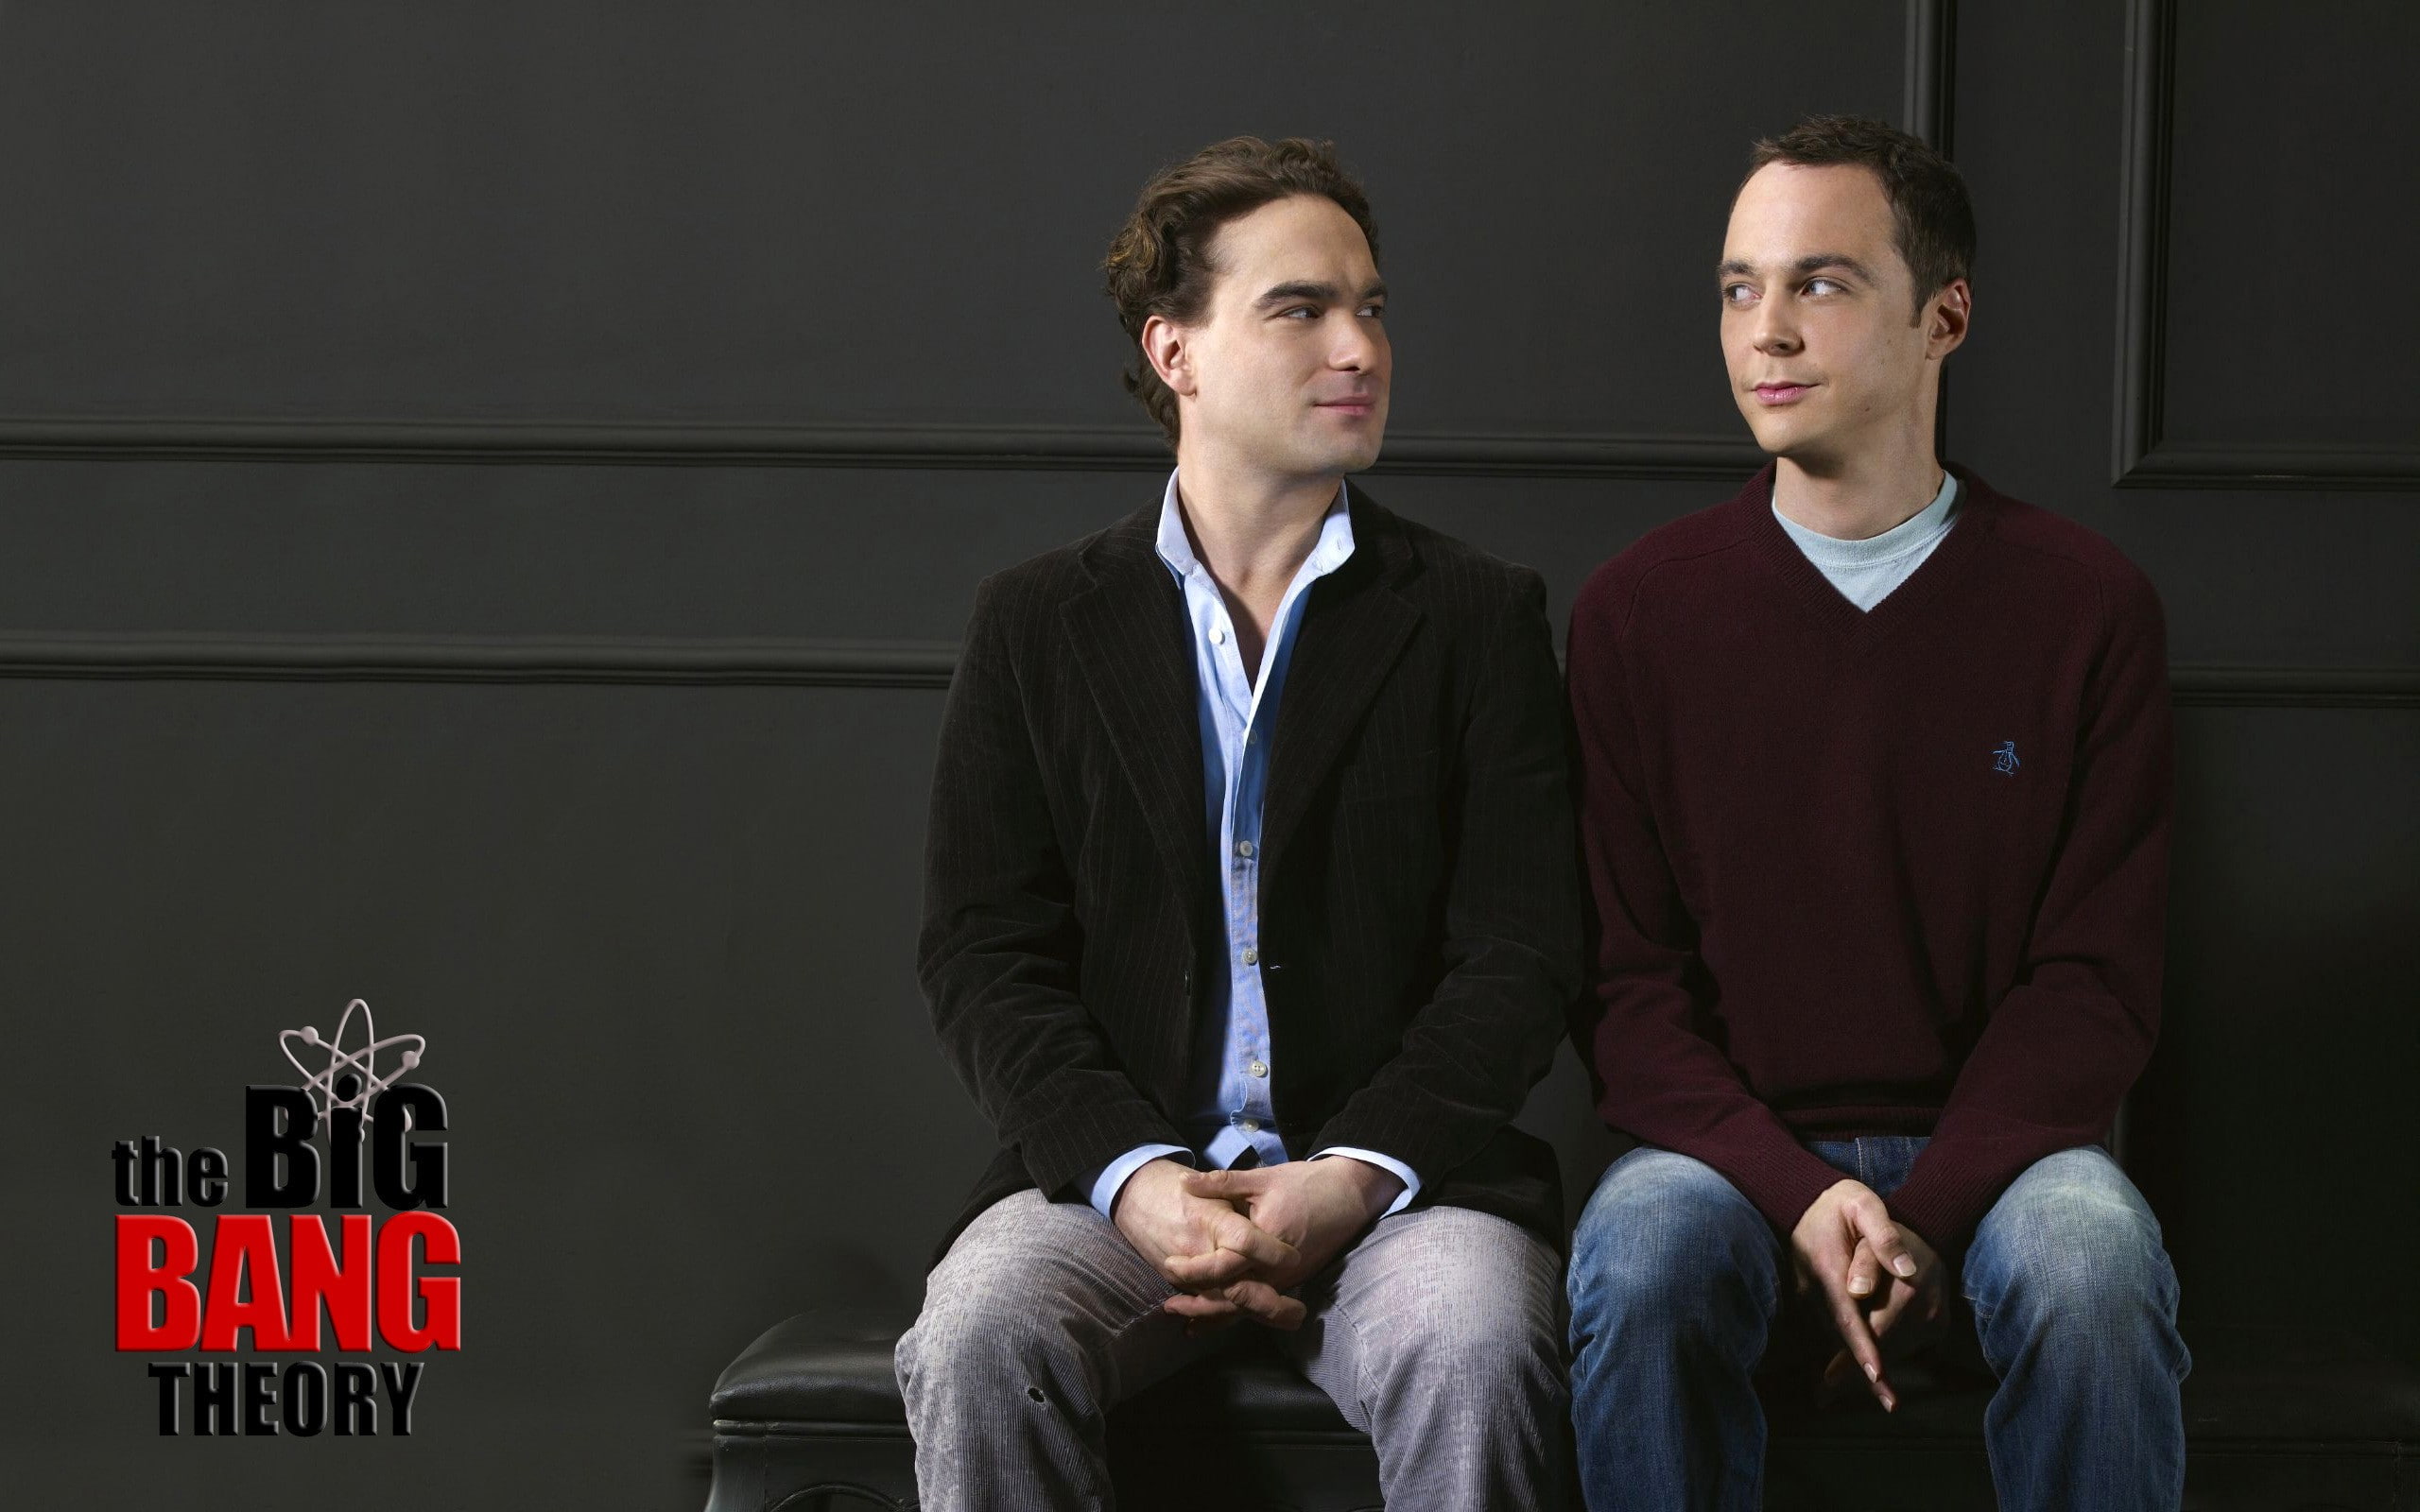 The Big Bang Theory series, men's maroon v neck sweater, sitcom actors